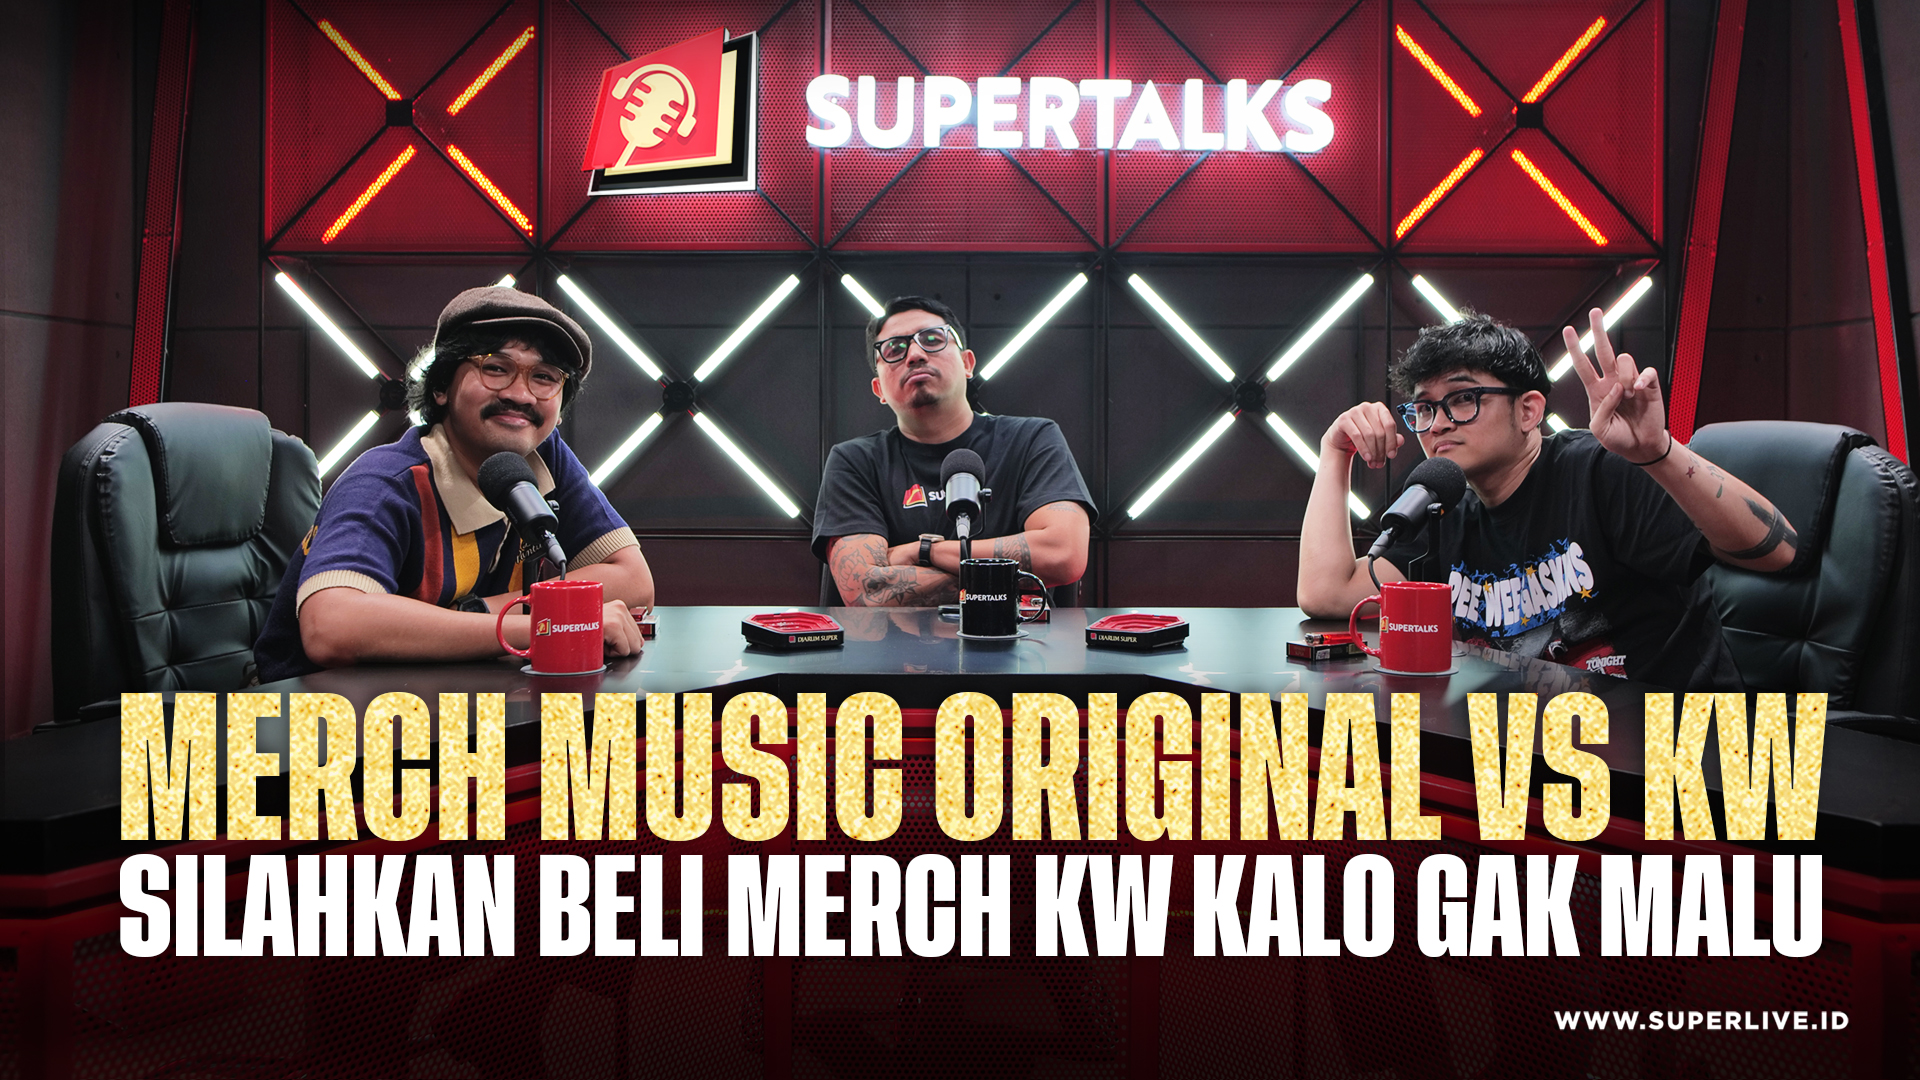 SUPERTALKS - MERCH MUSIC ORIGINAL VS KW "SILAHKAN BELI MERCH KW KALO GAK MALU"